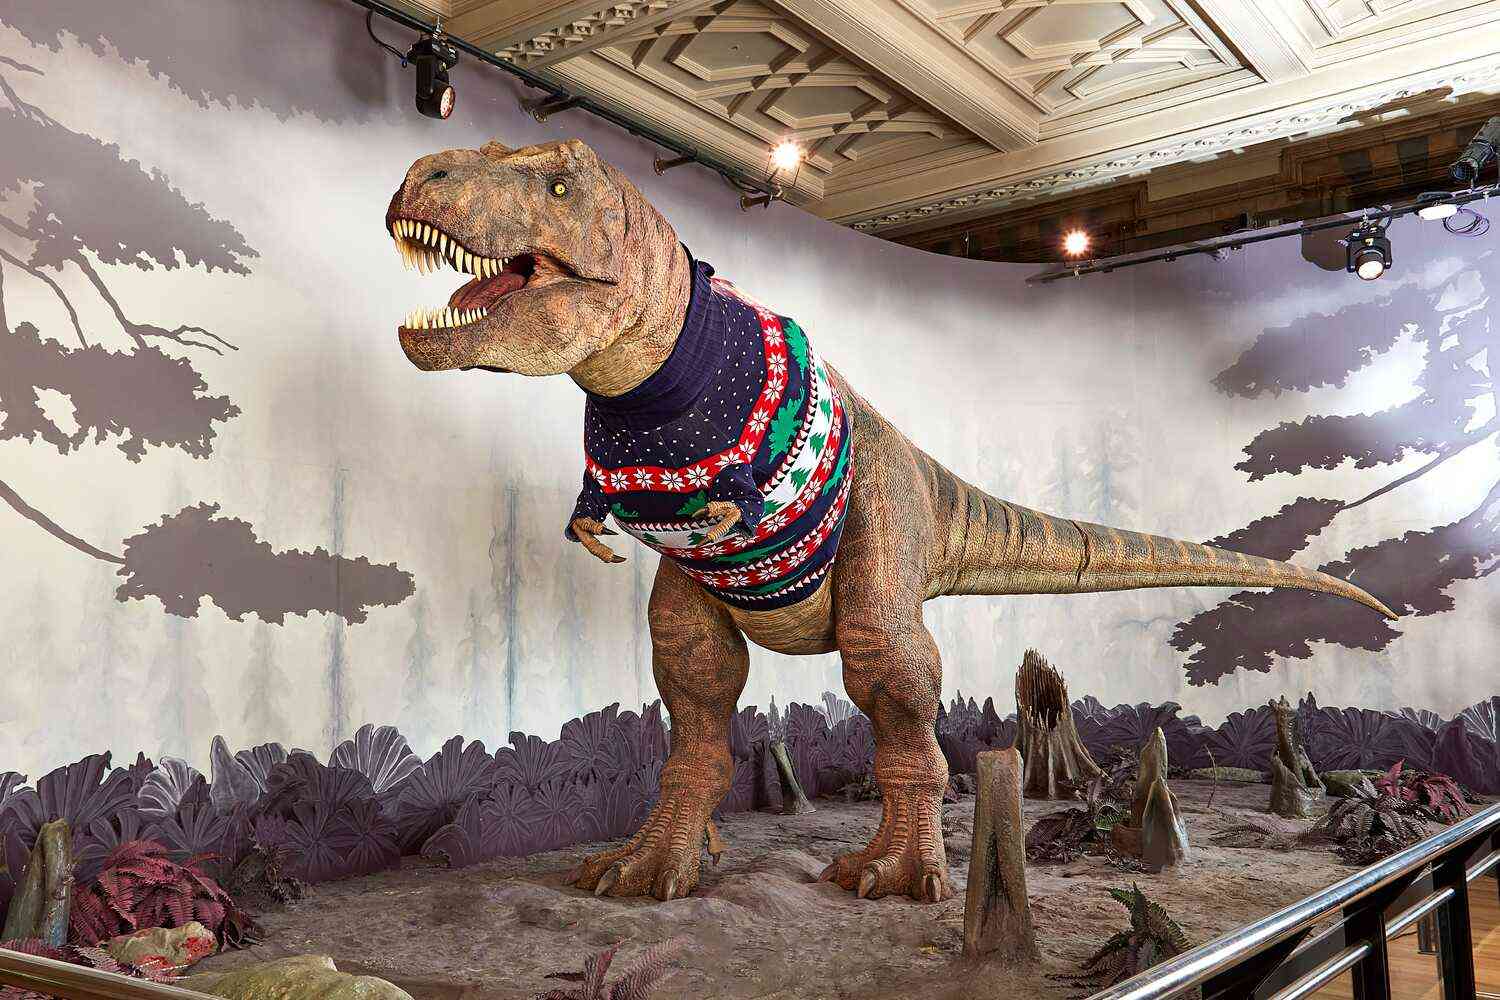 Zoo Atlanta takes on Christmas with giant snow-covered T. Rex